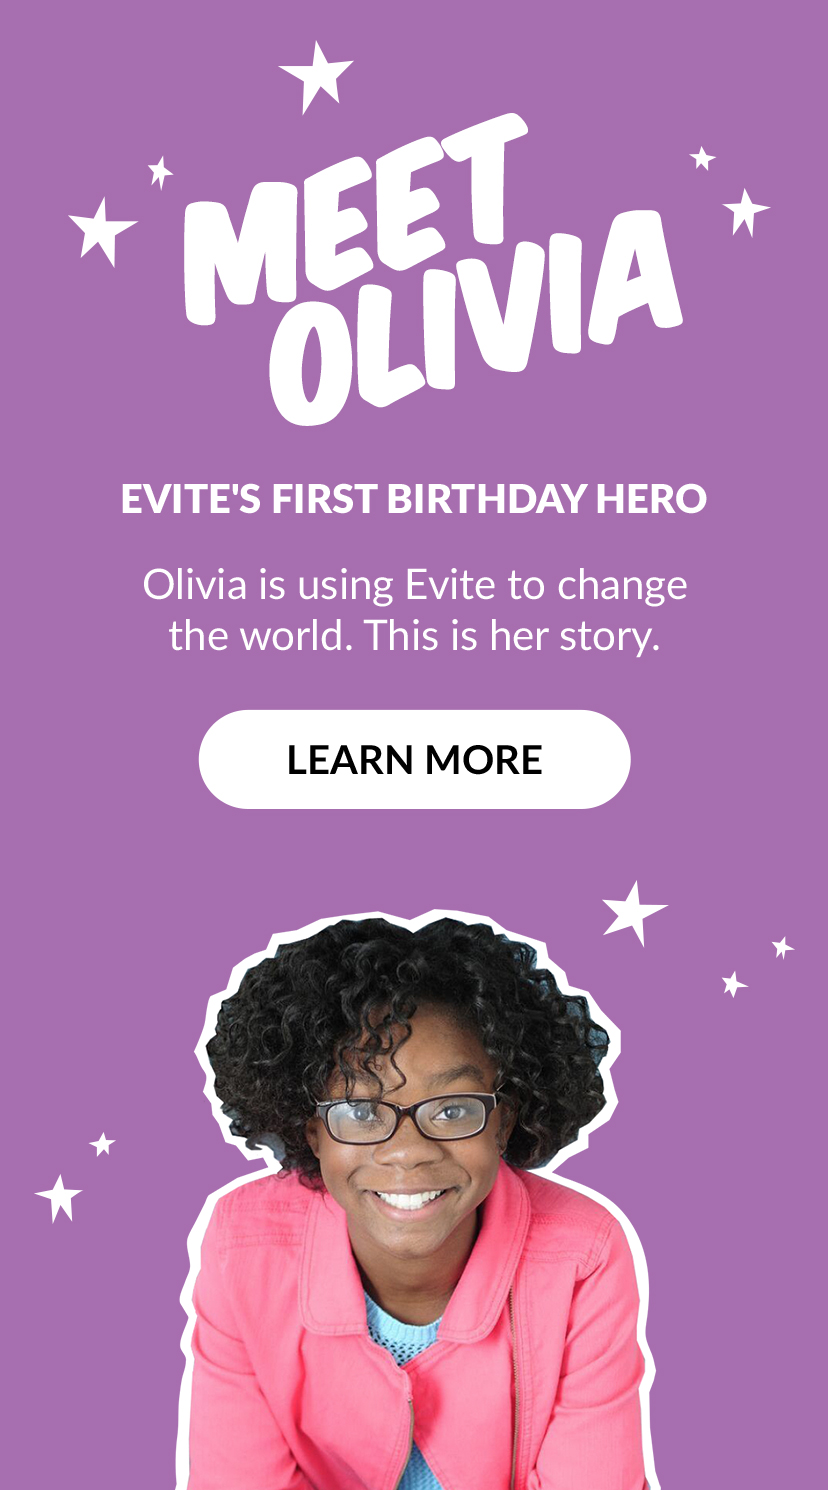 Meet Olivia, Evite's first birthday hero!